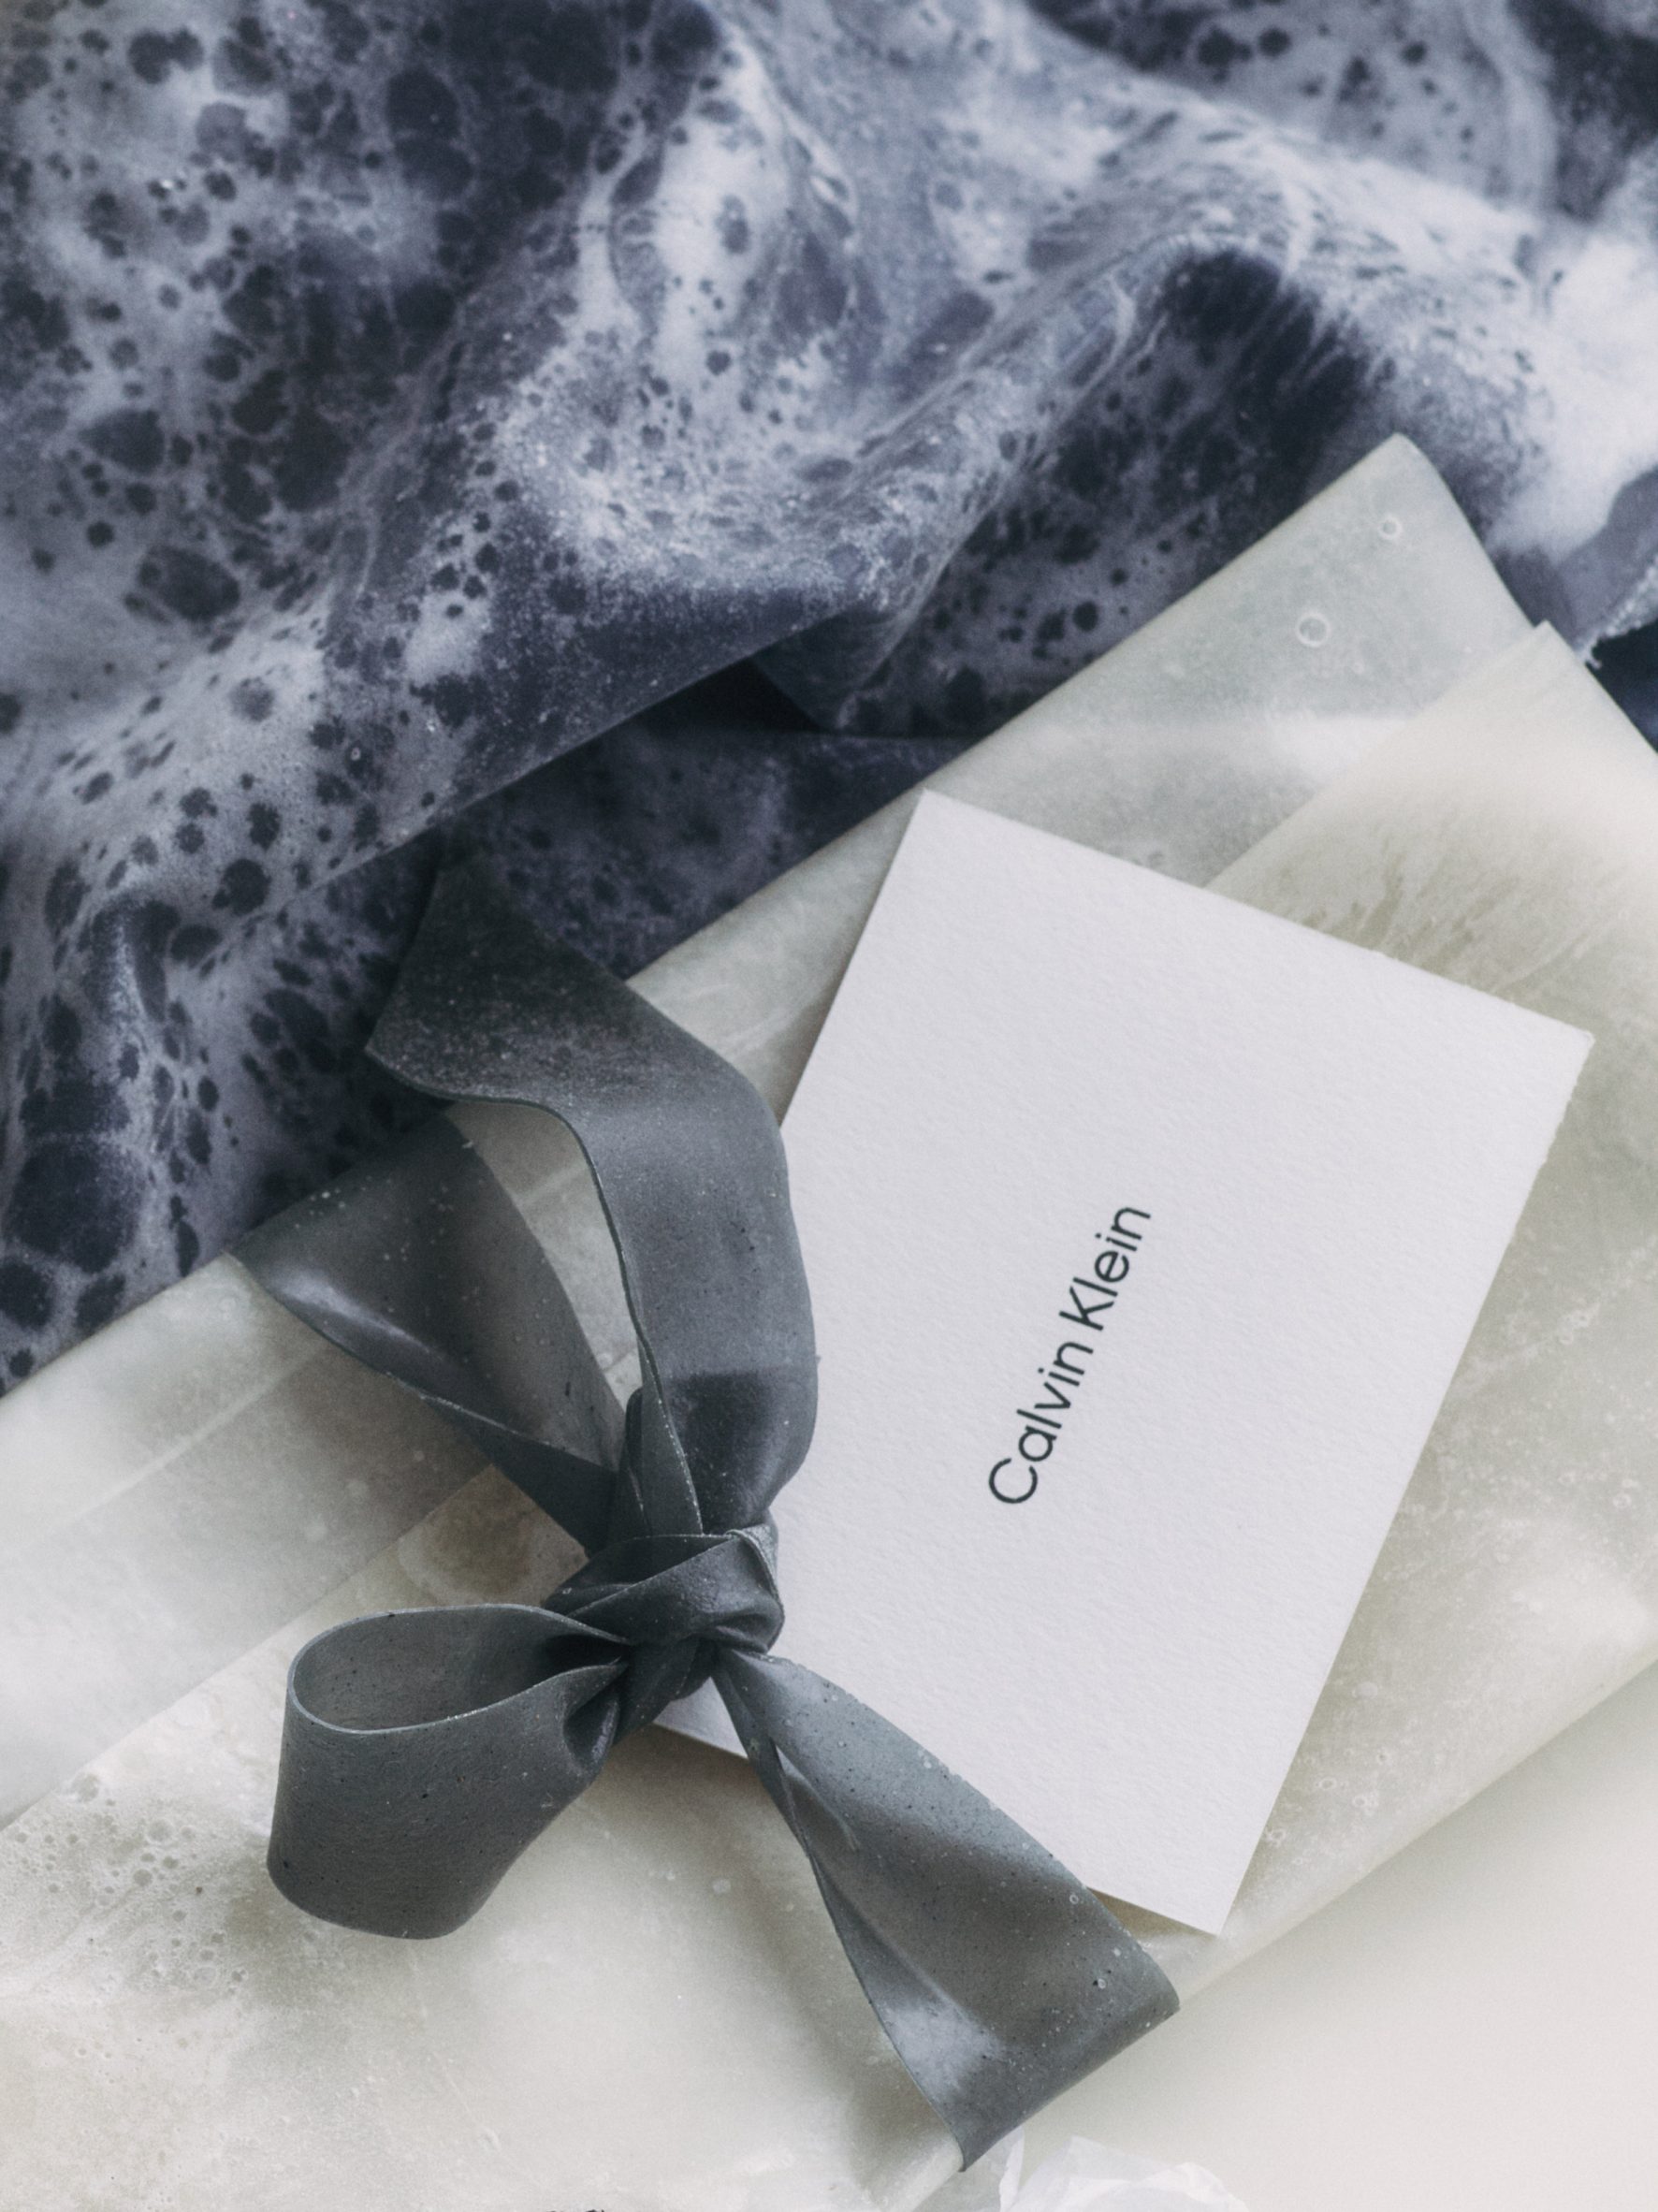 Natural Material Studio creates biomaterial gift wrap for Calvin Klein